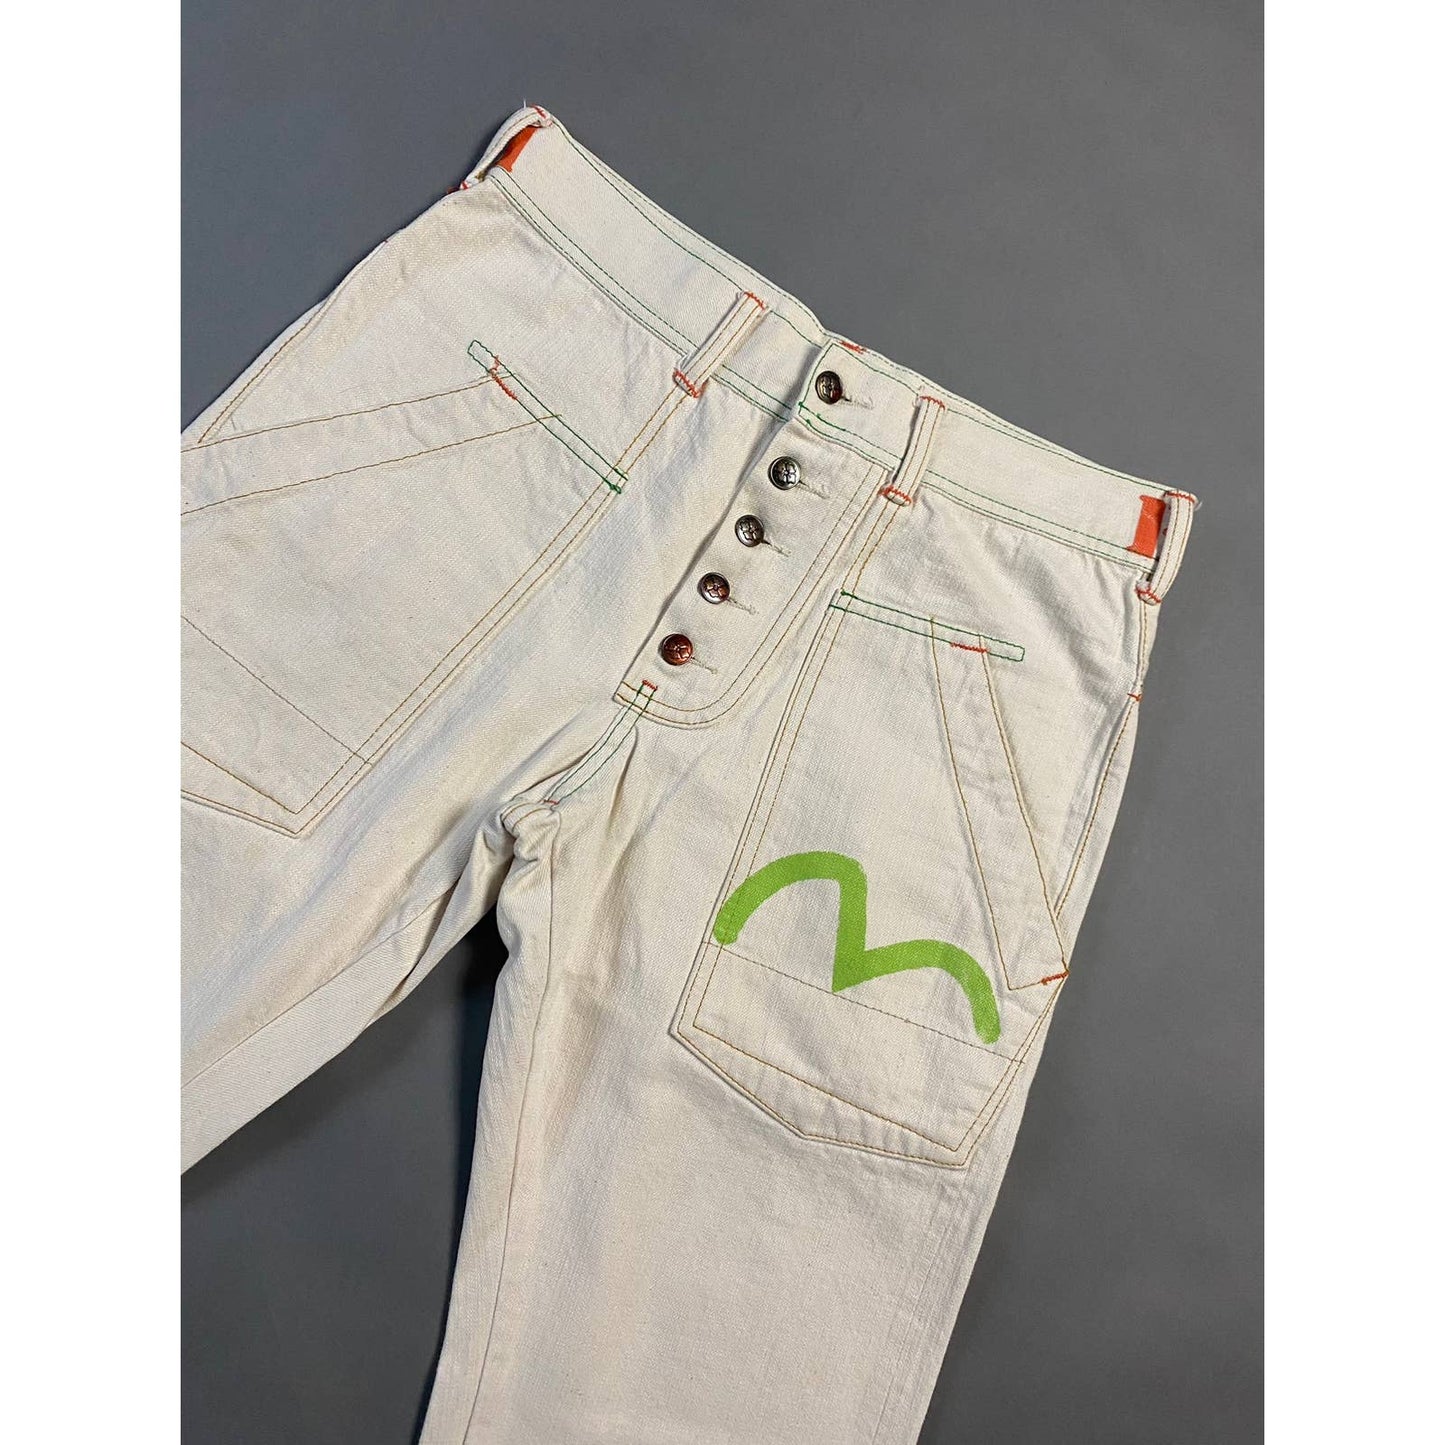 Evisu Genes Osaka vintage white jeans selvedge green orange